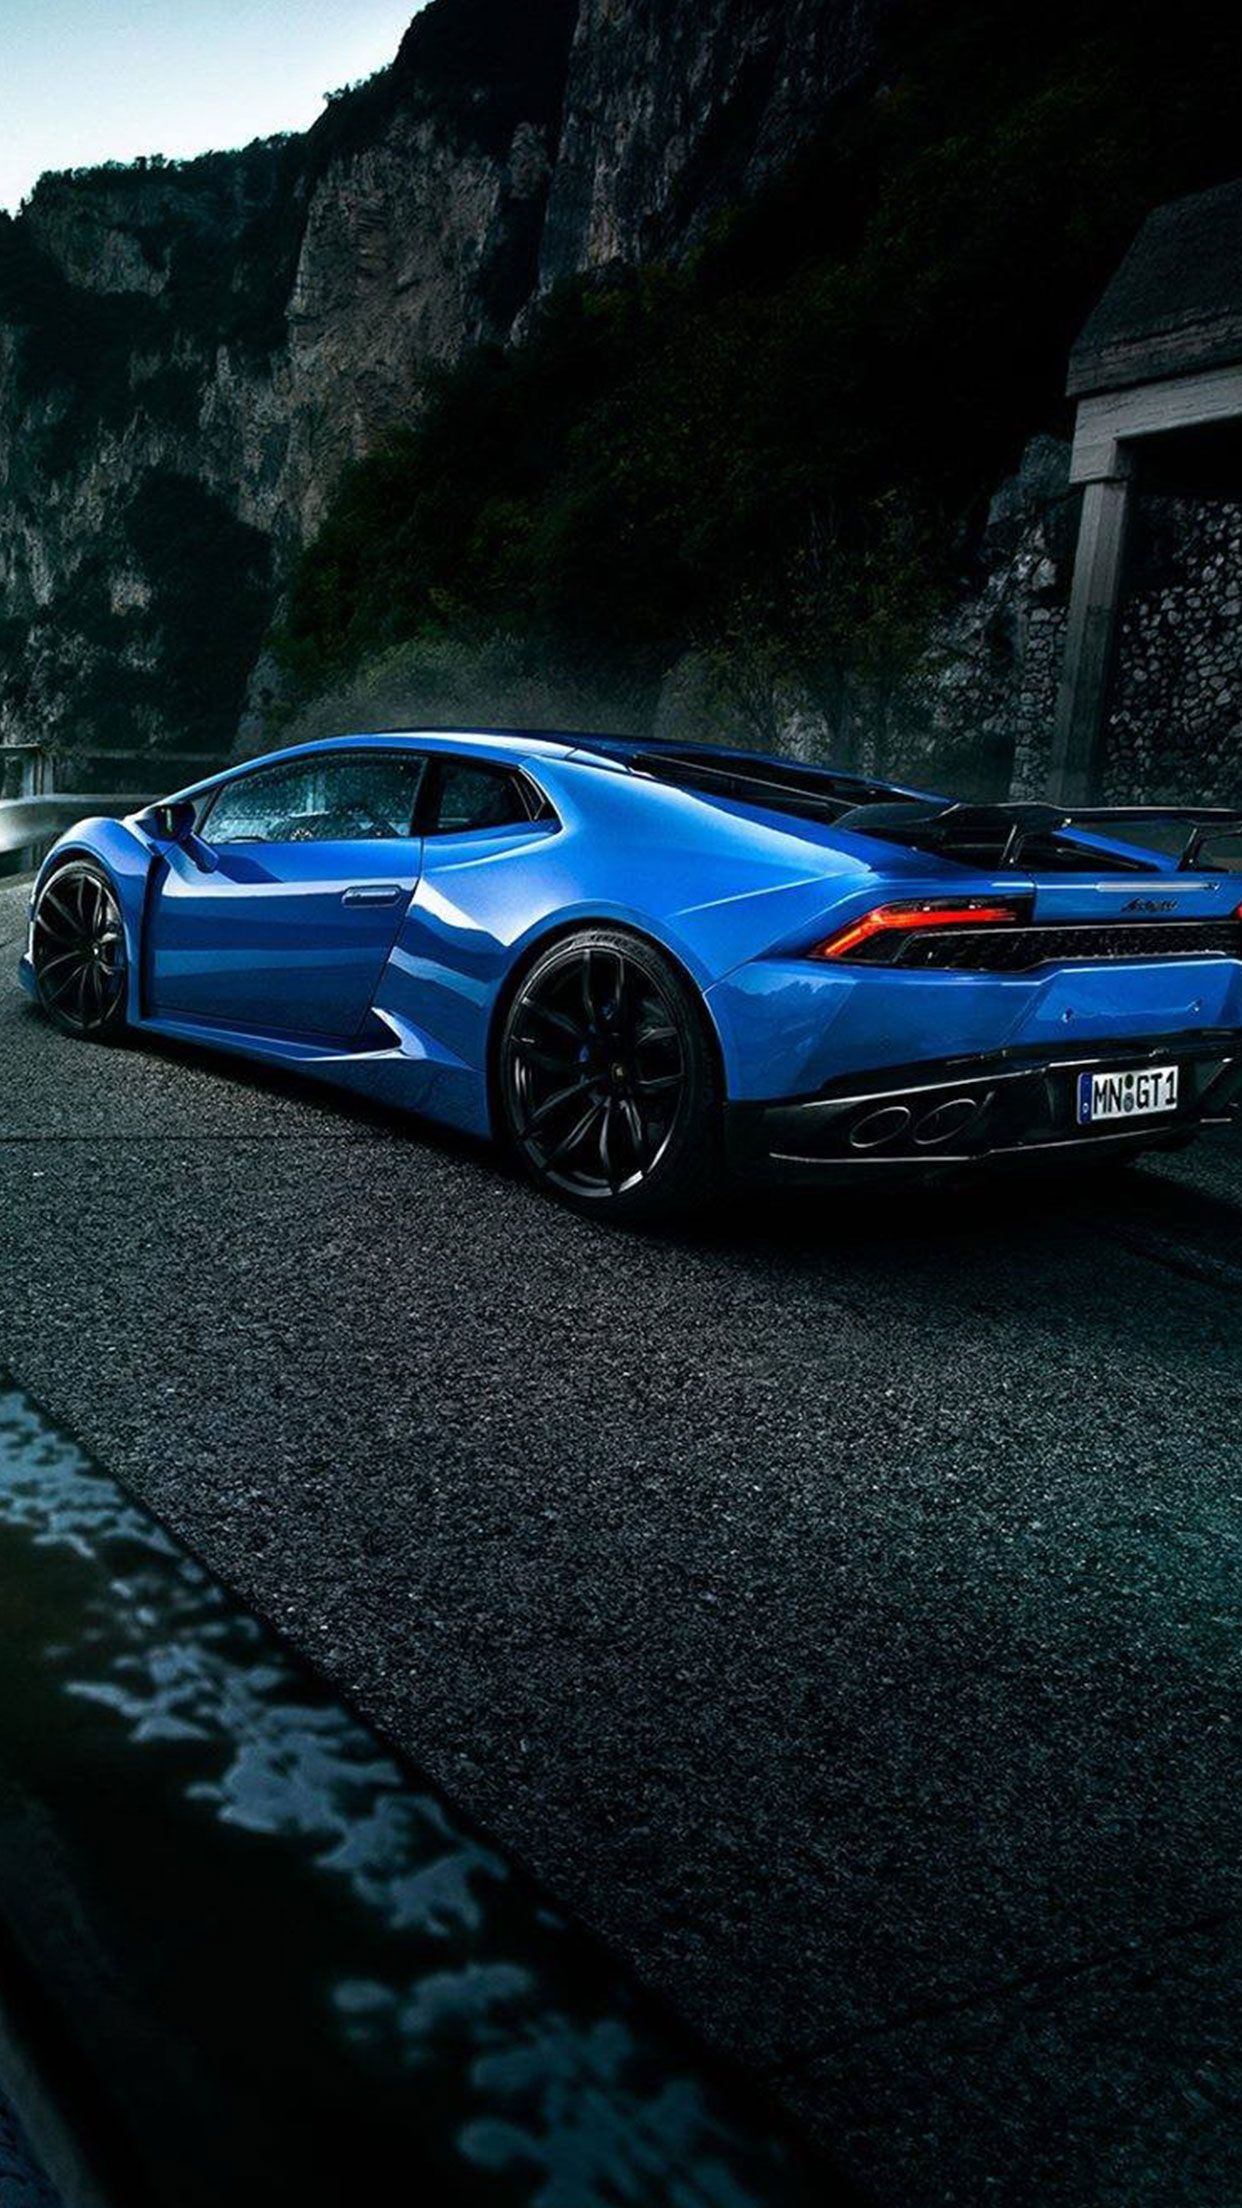 Blue Lamborghini Car Wallpaper iPhone Android